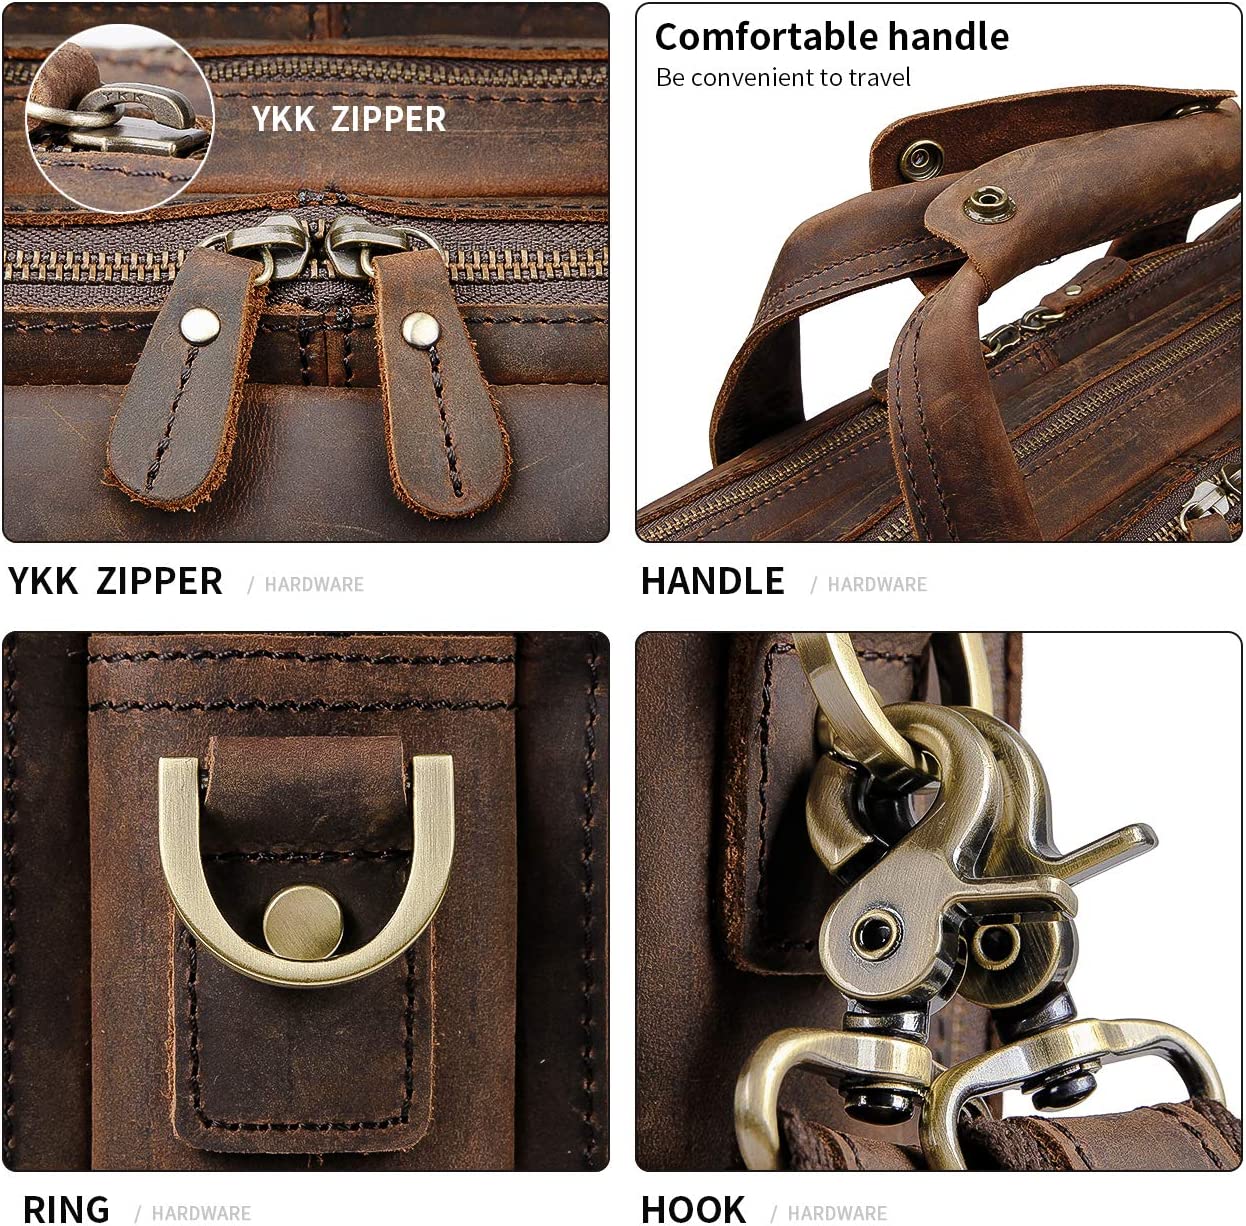 Augus Leather Briefcase for Men Business Travel Messenger Bags 15.6 Inch Laptop Bag YKK Metal Zipper, Brown